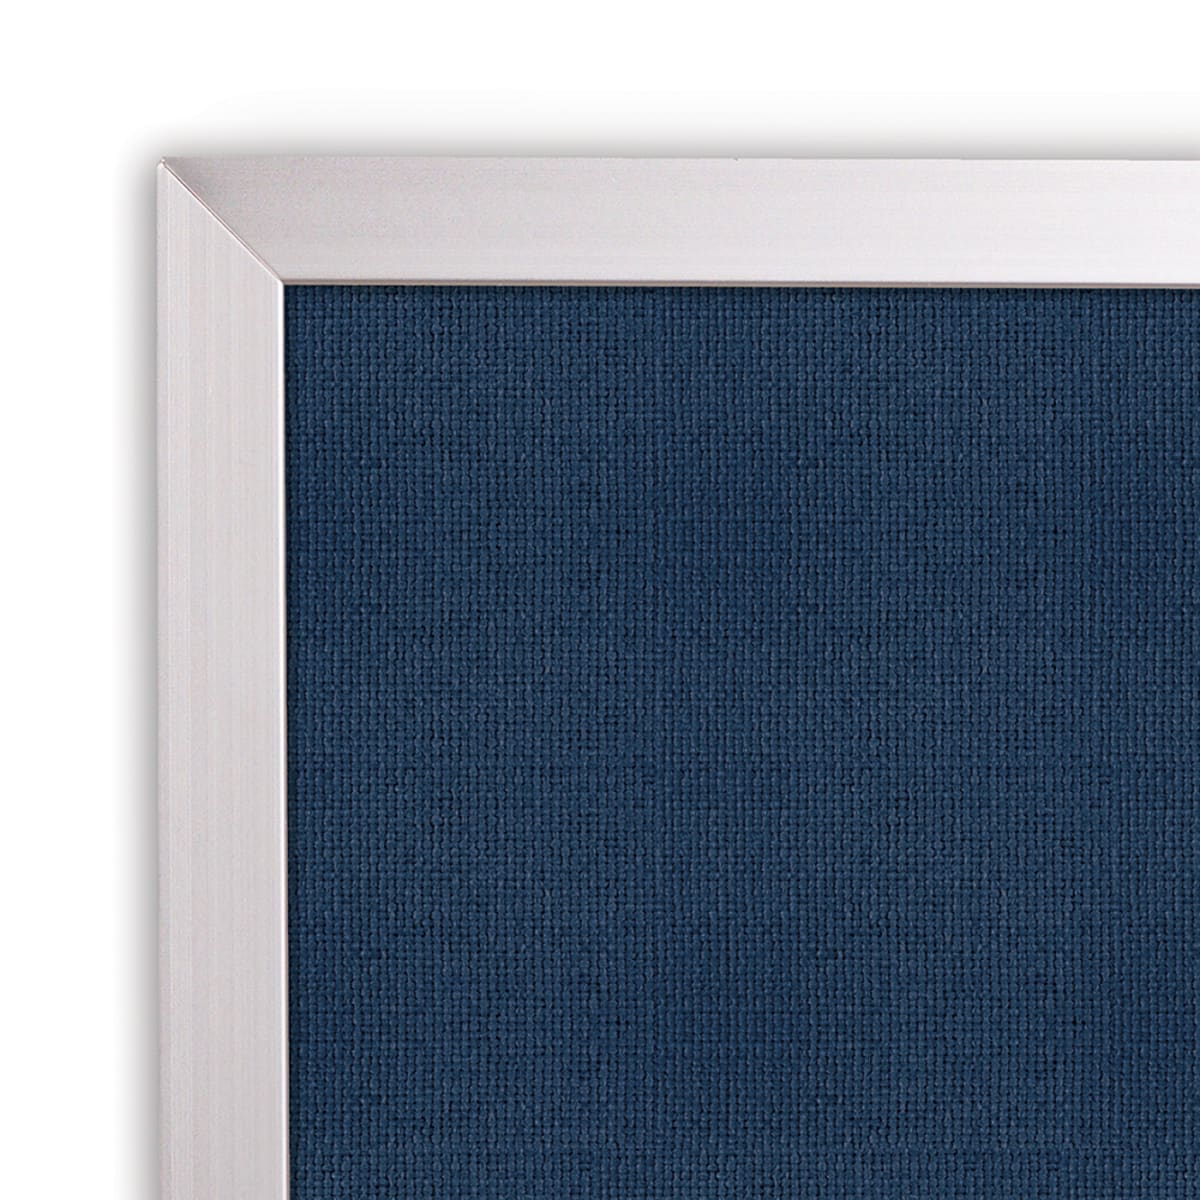 Mooreco Fabric Cork - Plate Tackboard - Aluminum Trim - 2'H x 3'W (MOR-333AB) - SchoolOutlet